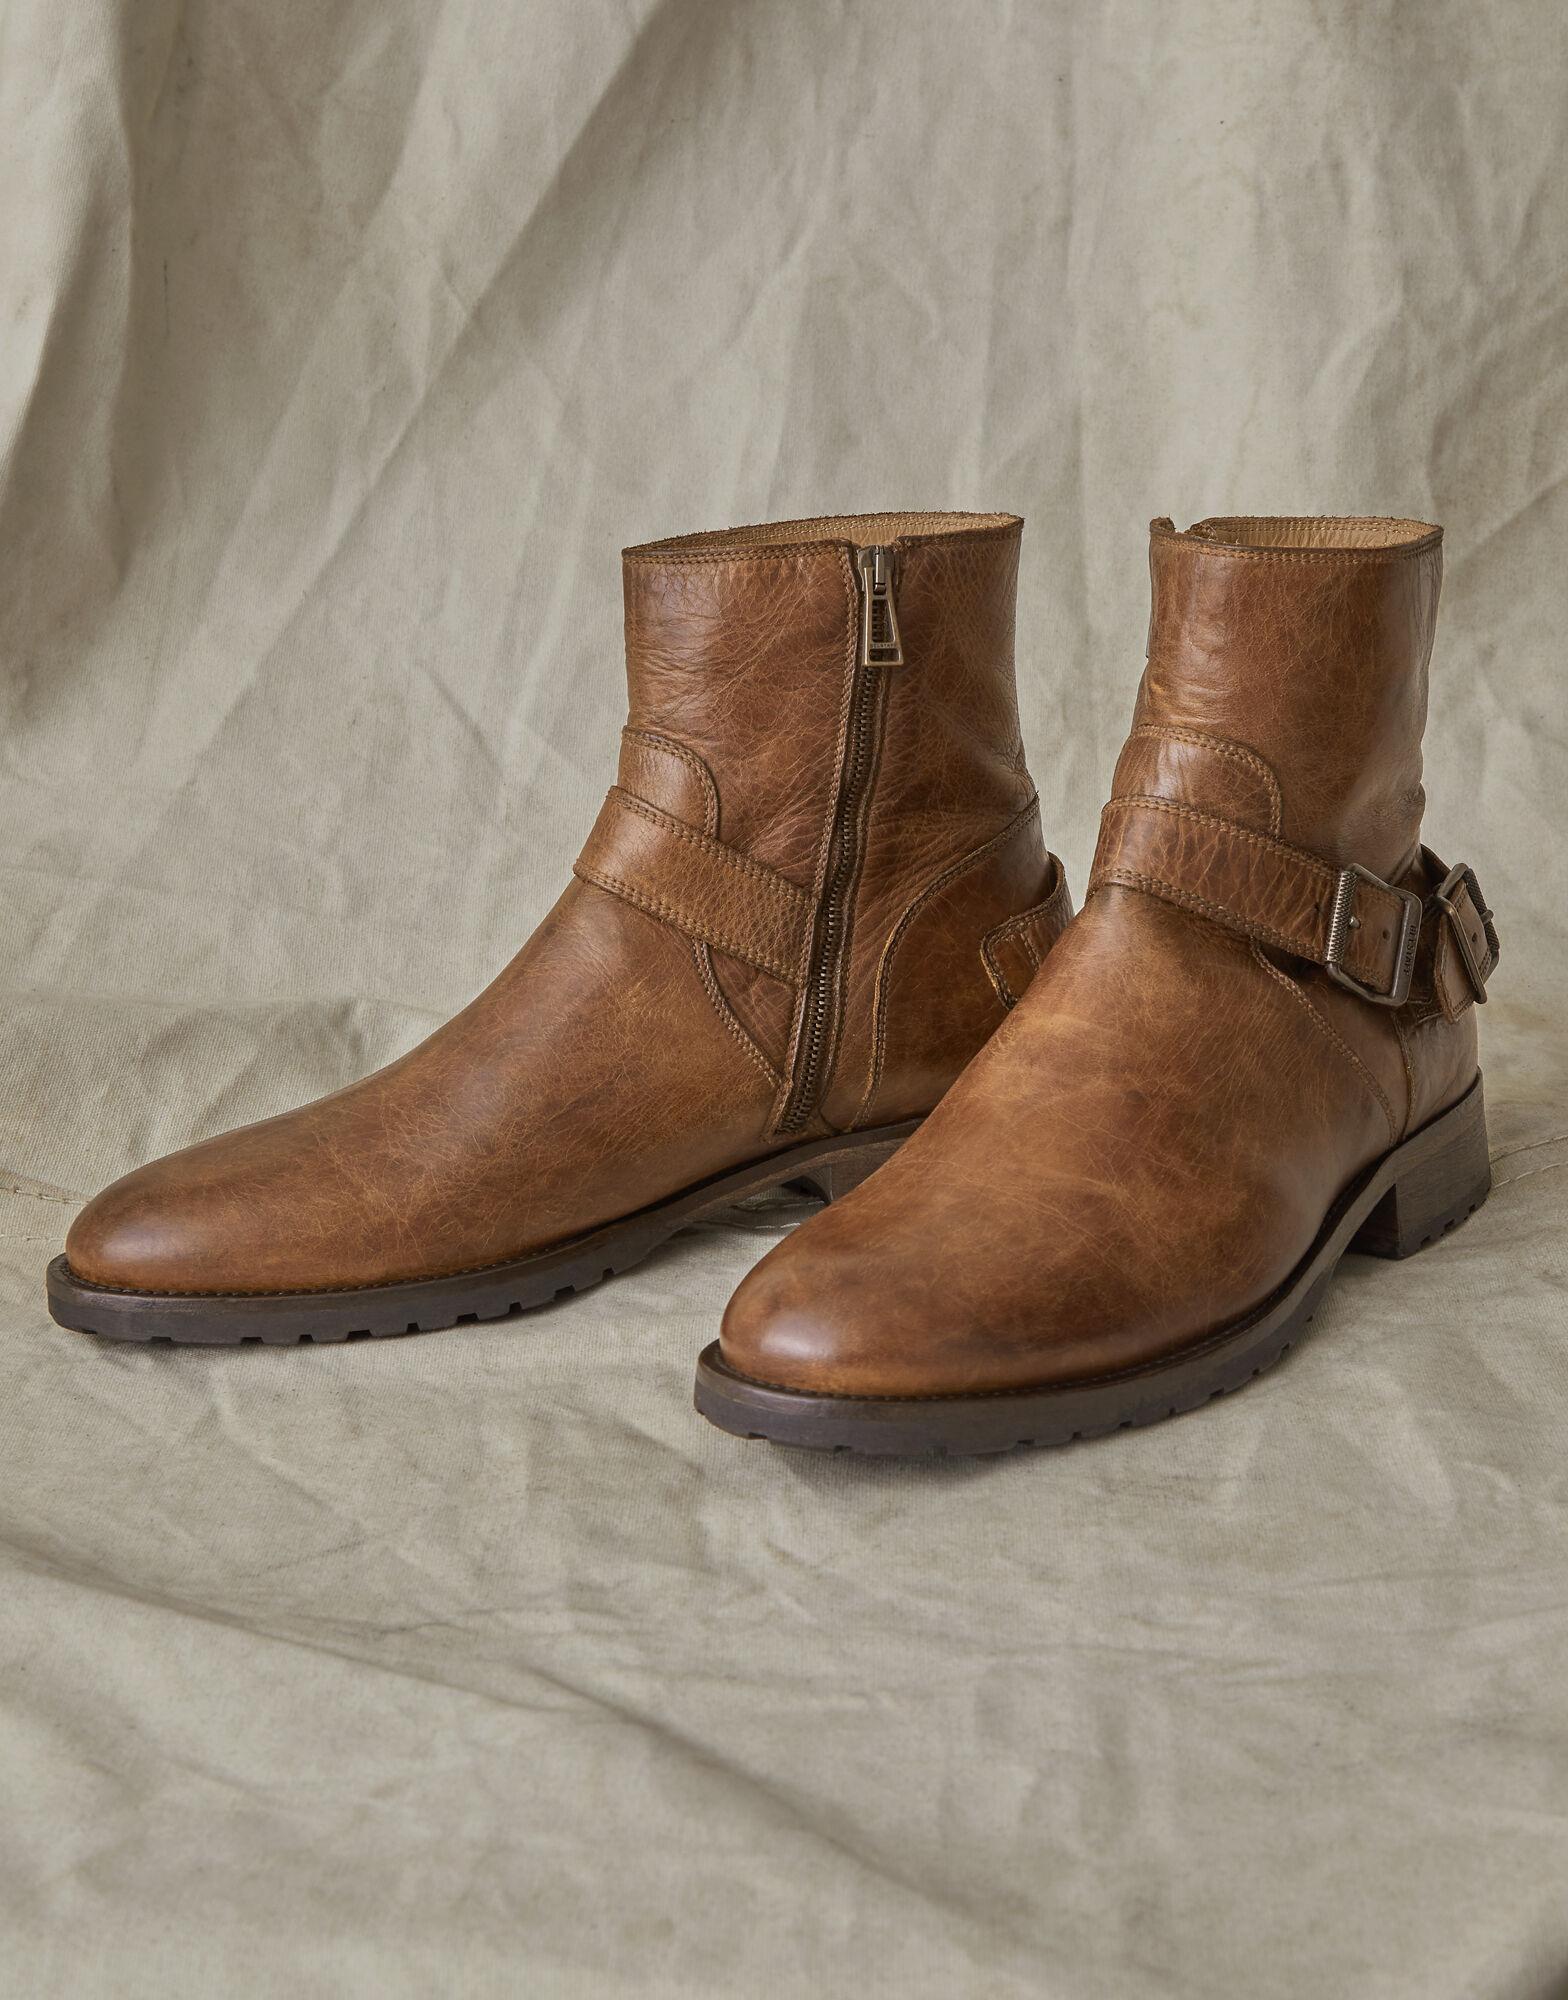 Belstaff Trialmaster Leather Boots in Cognac (Brown) for Men - Lyst